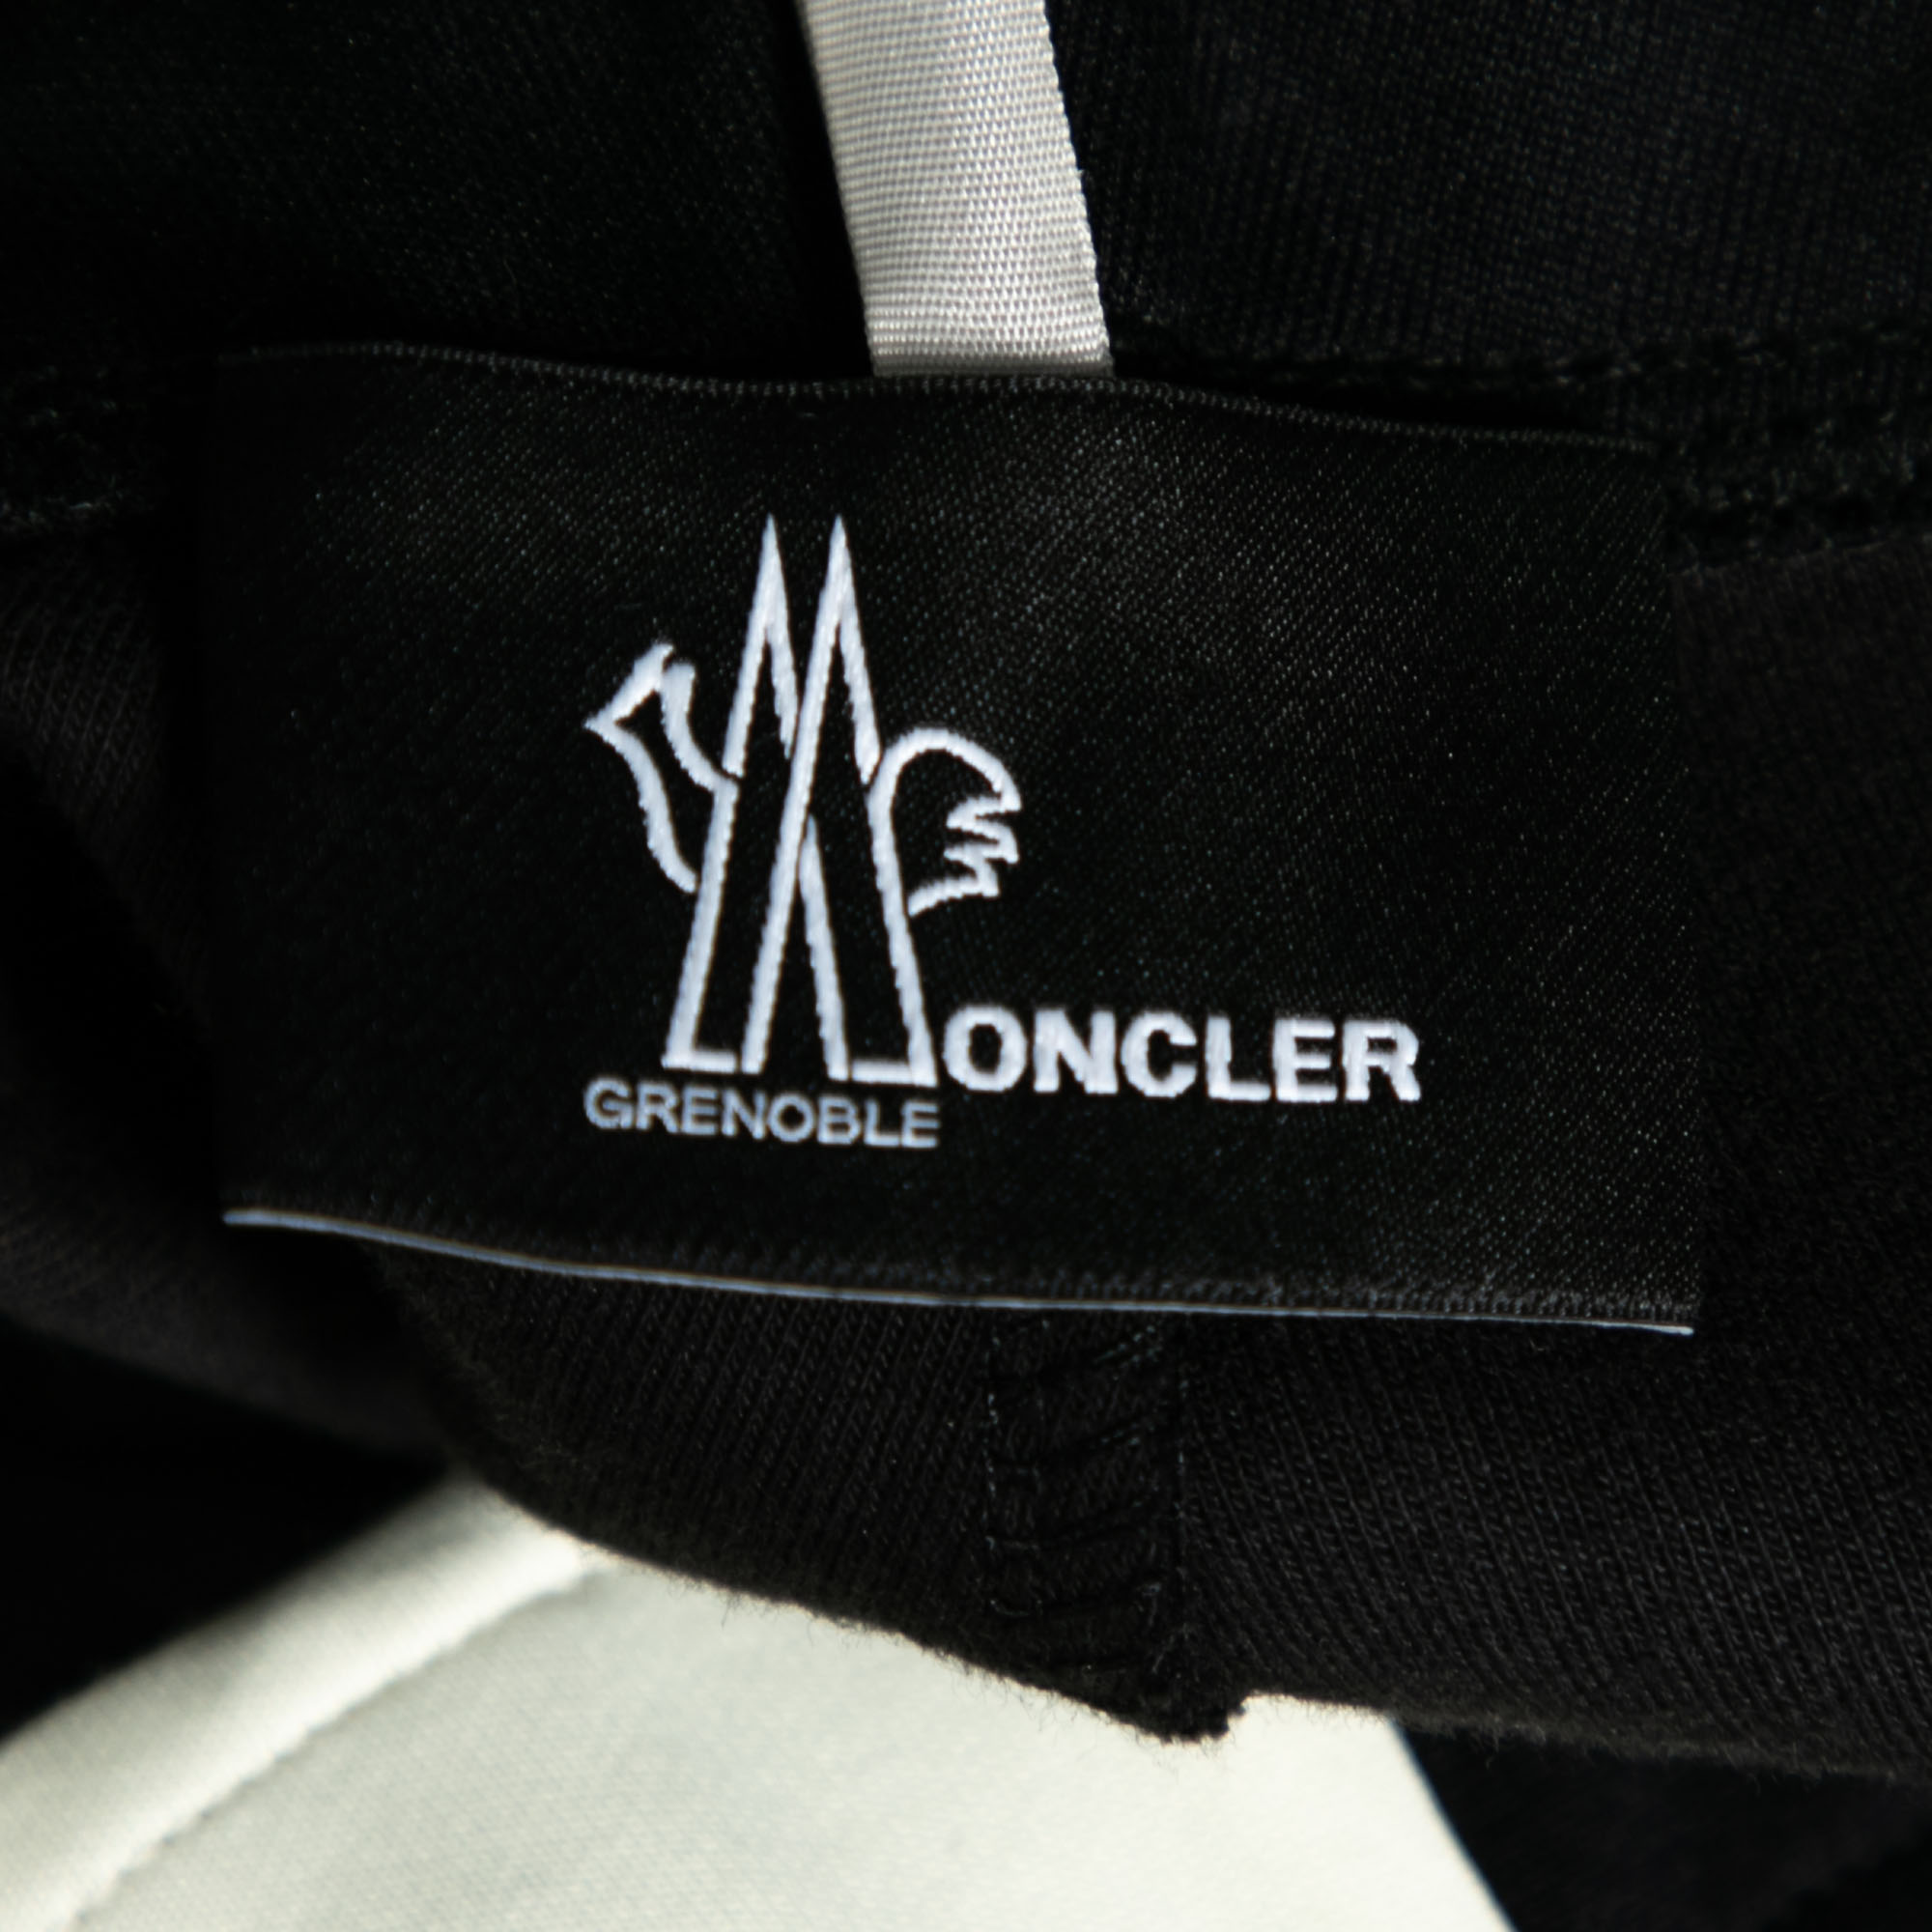 Moncler Grenoble Black Jersey Contrast Trimmed Sweatpants S